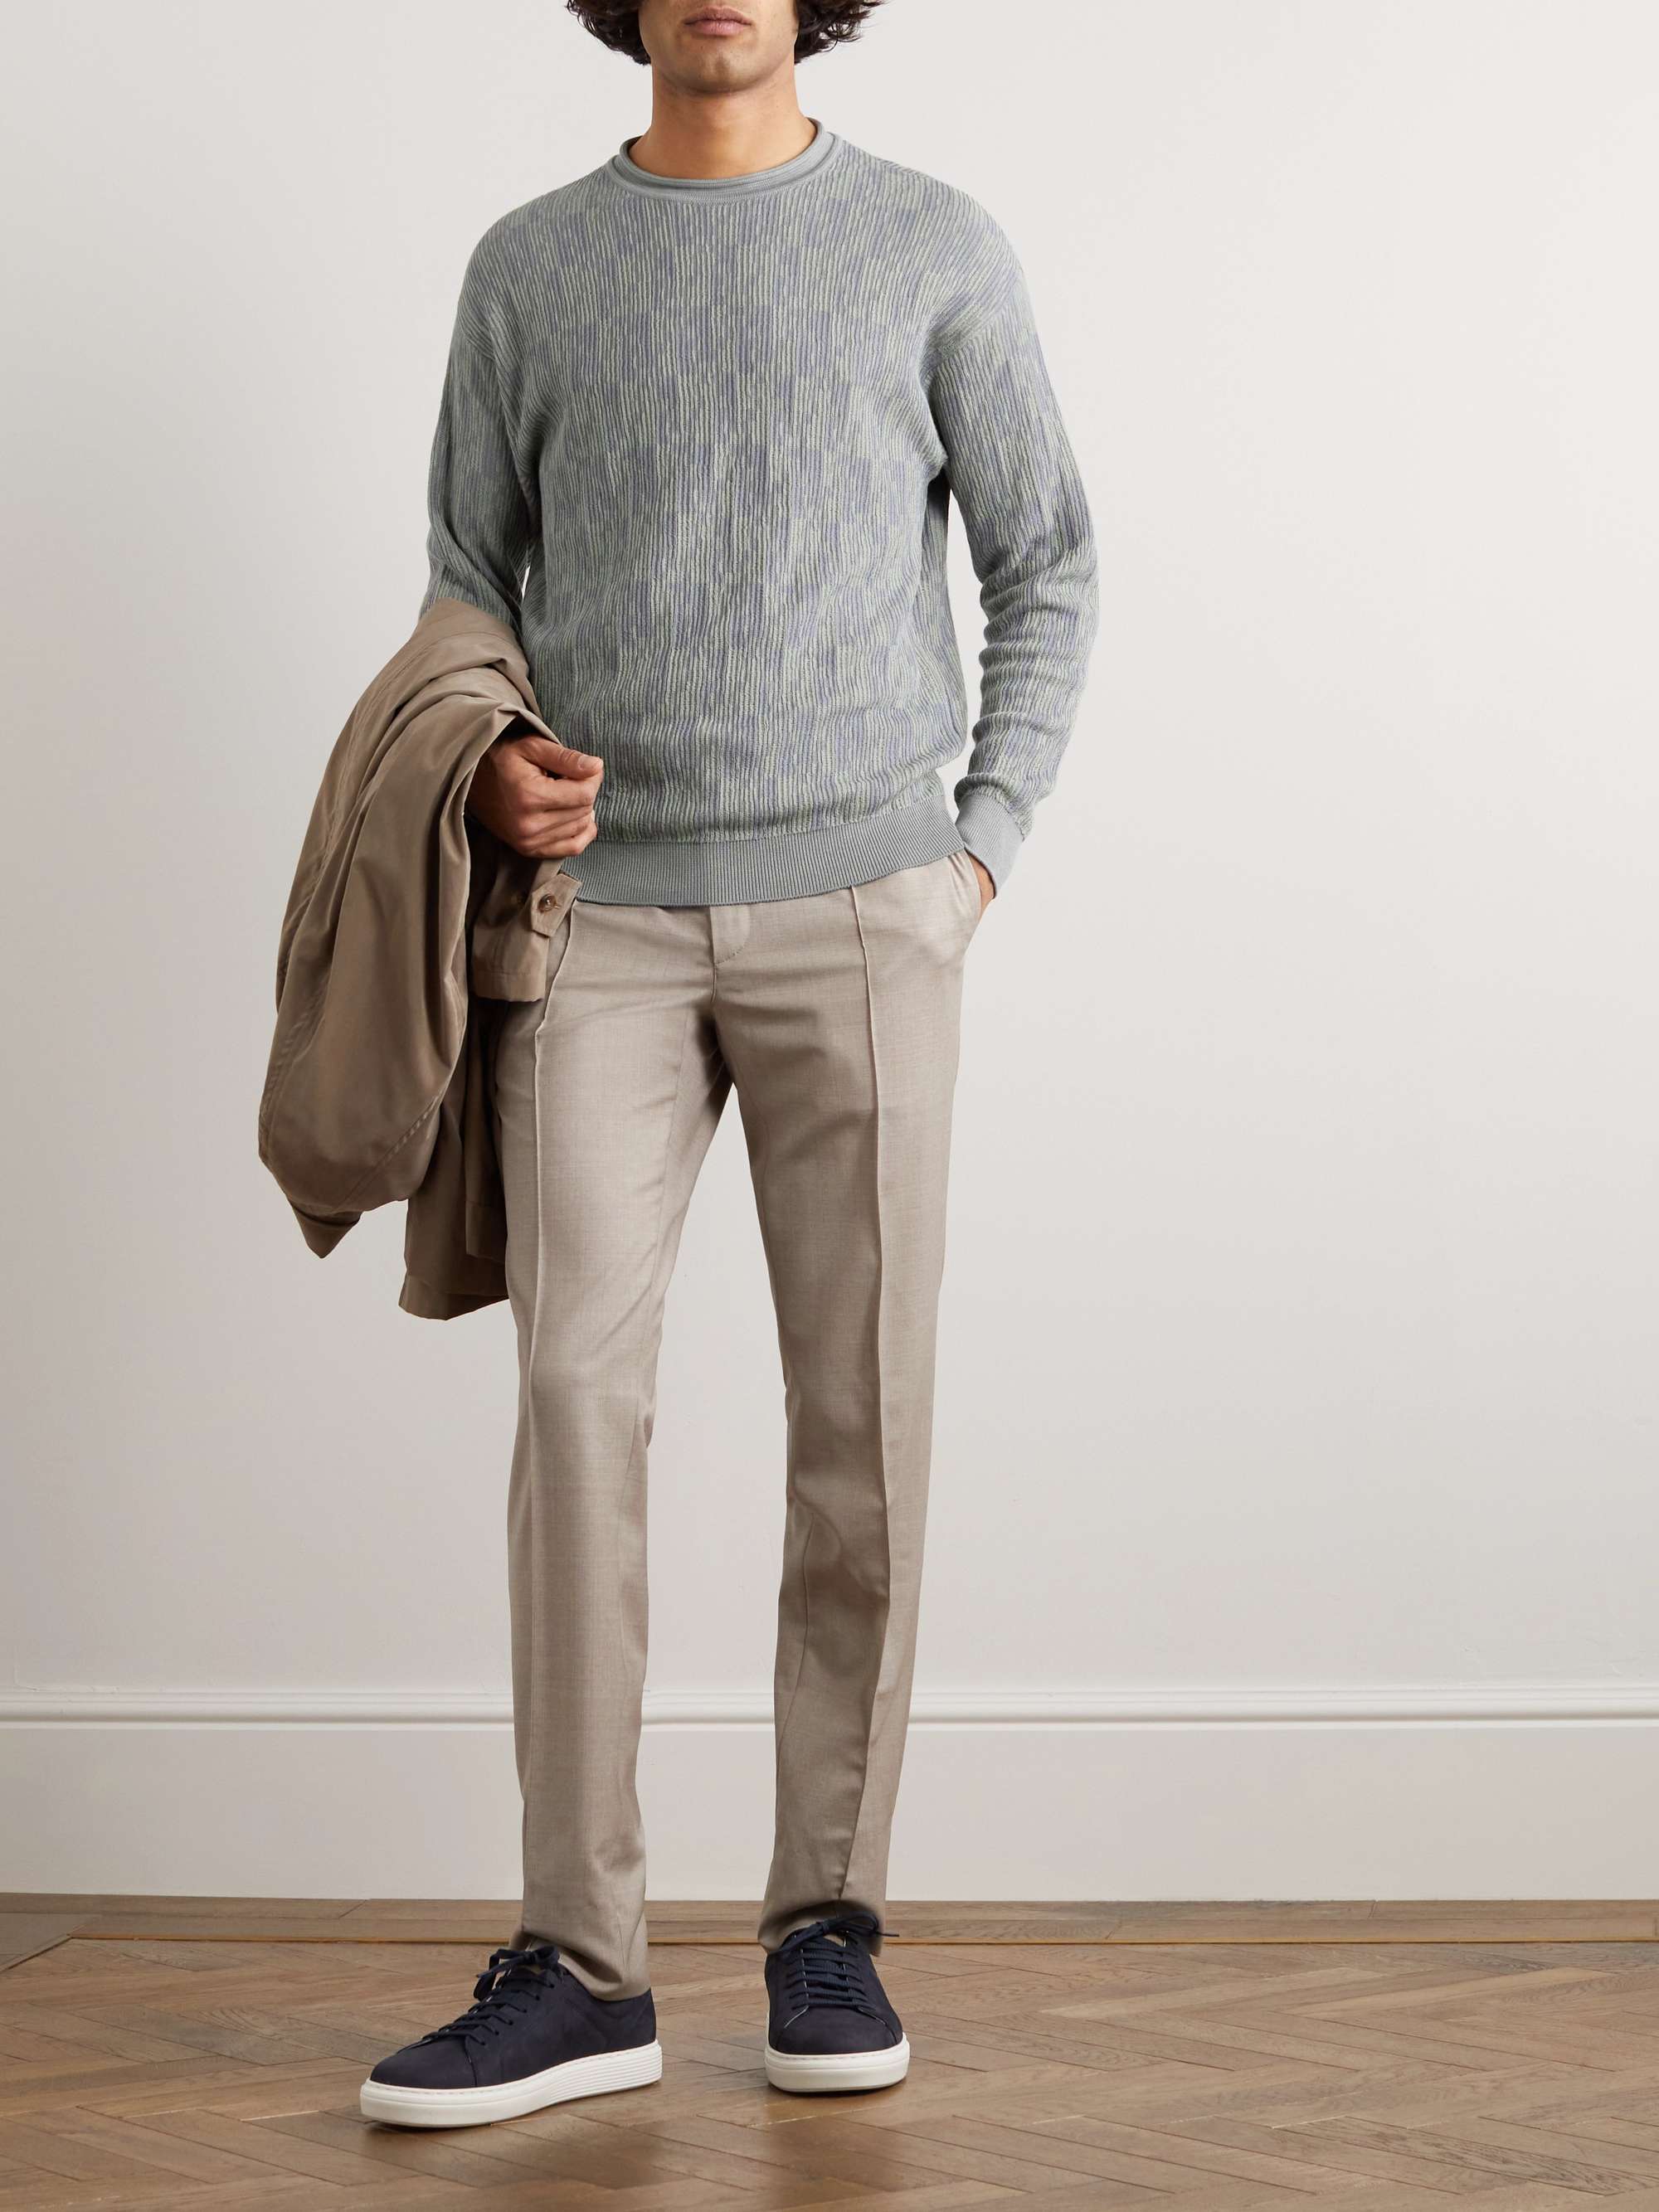 GIORGIO ARMANI Slim-Fit Jacquard-Knit Cotton and Cashmere-Blend Sweater